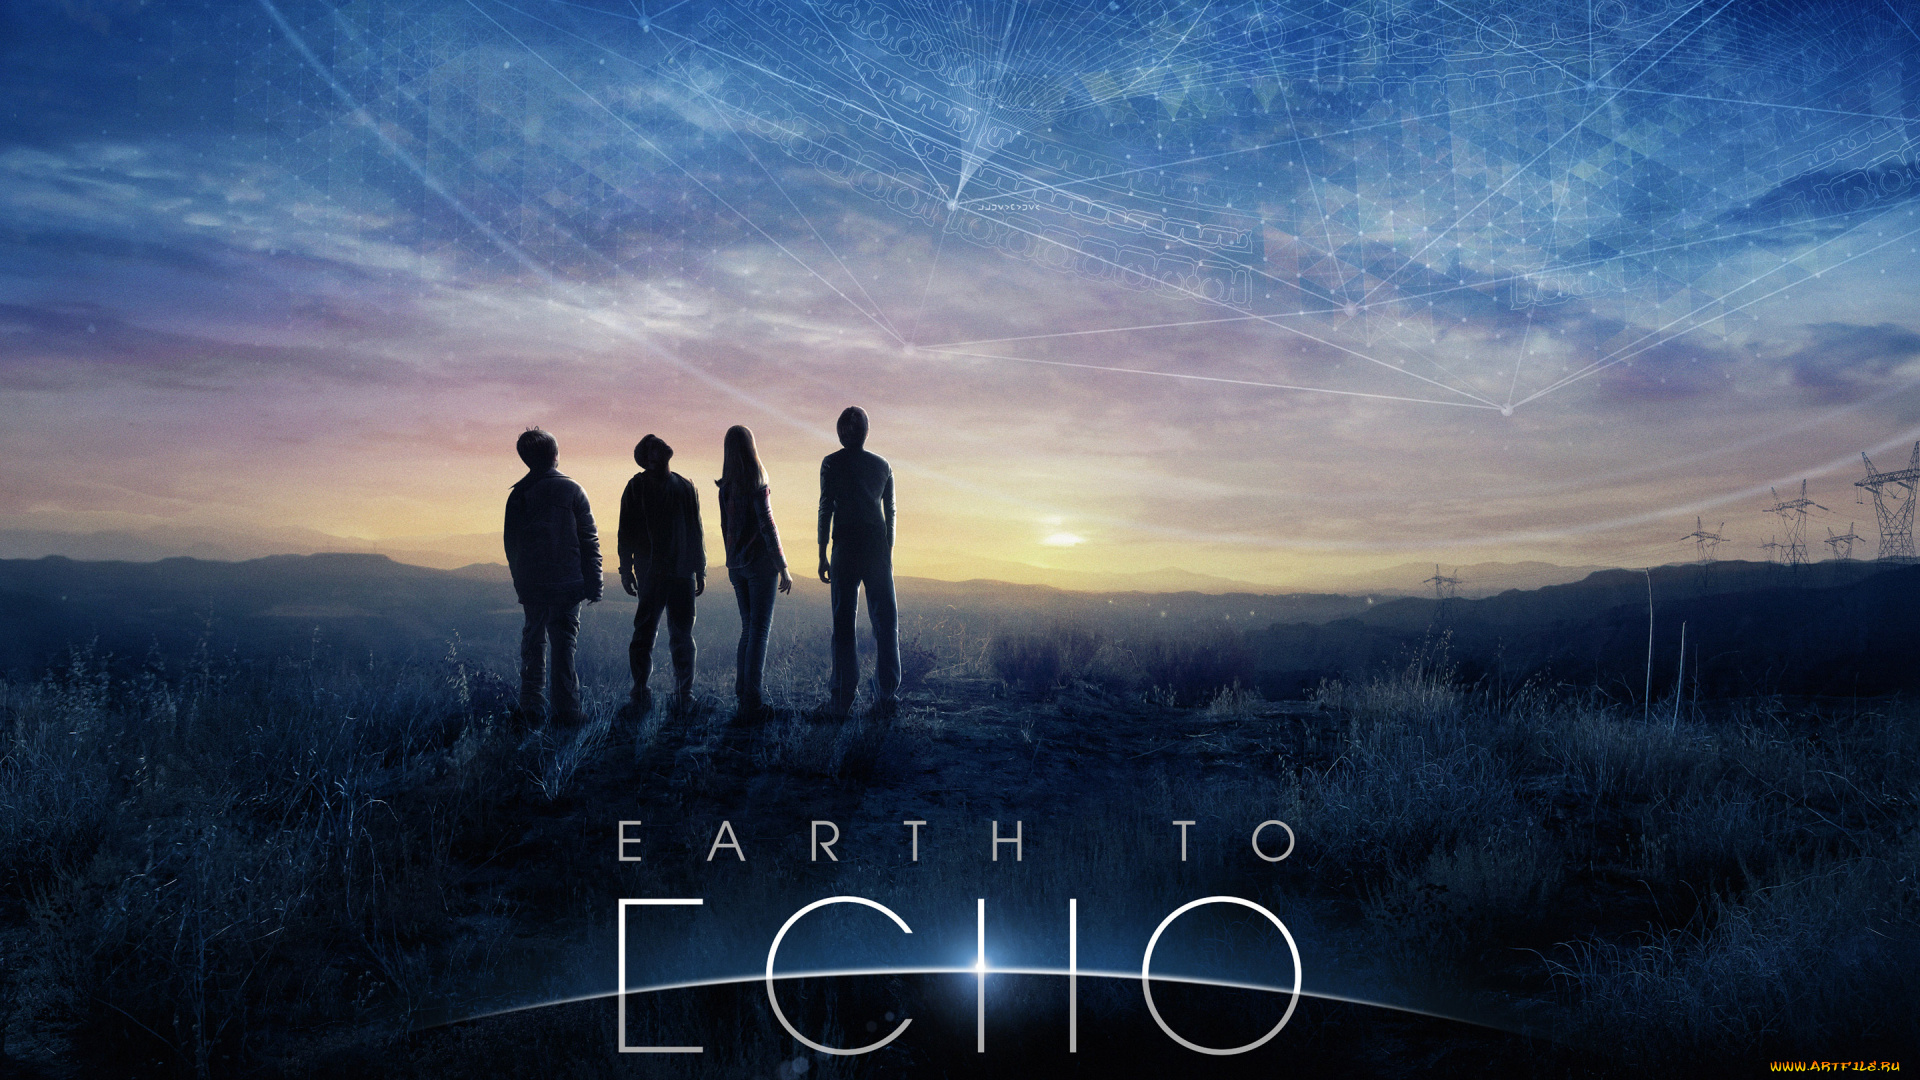 earth, to, echo, кино, фильмы, эхо